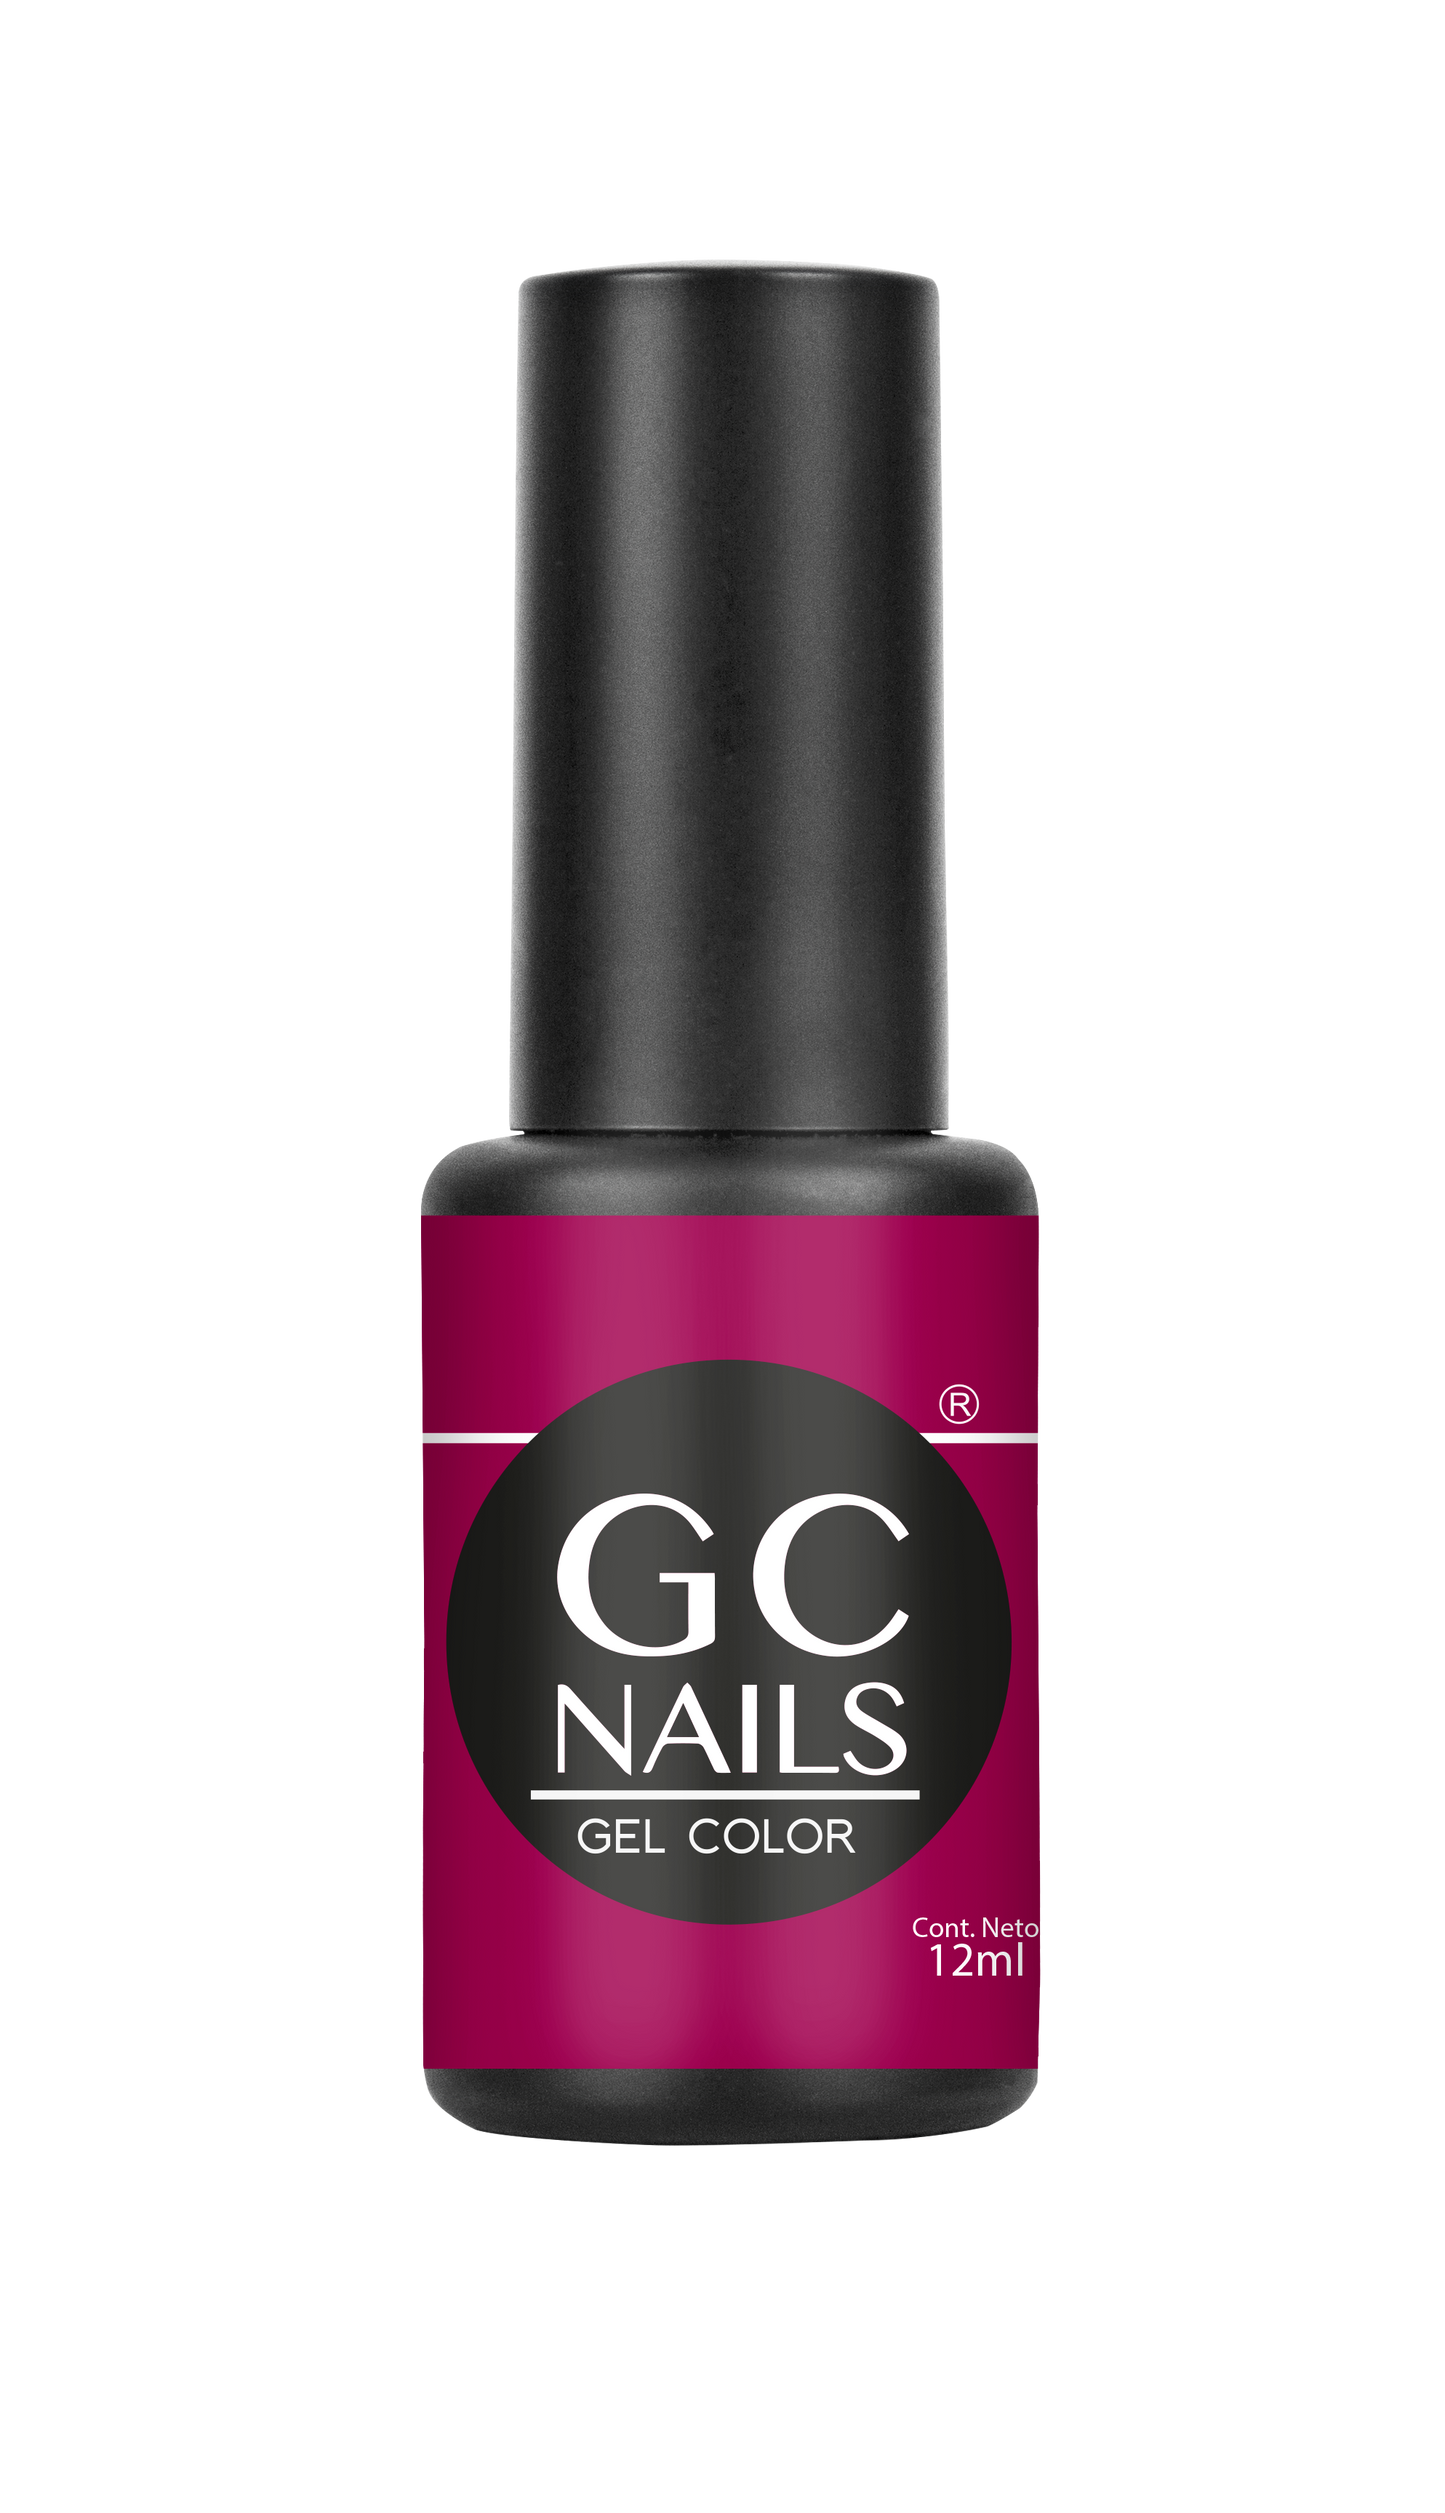 GC nails bel-color 12ml CORSET 87